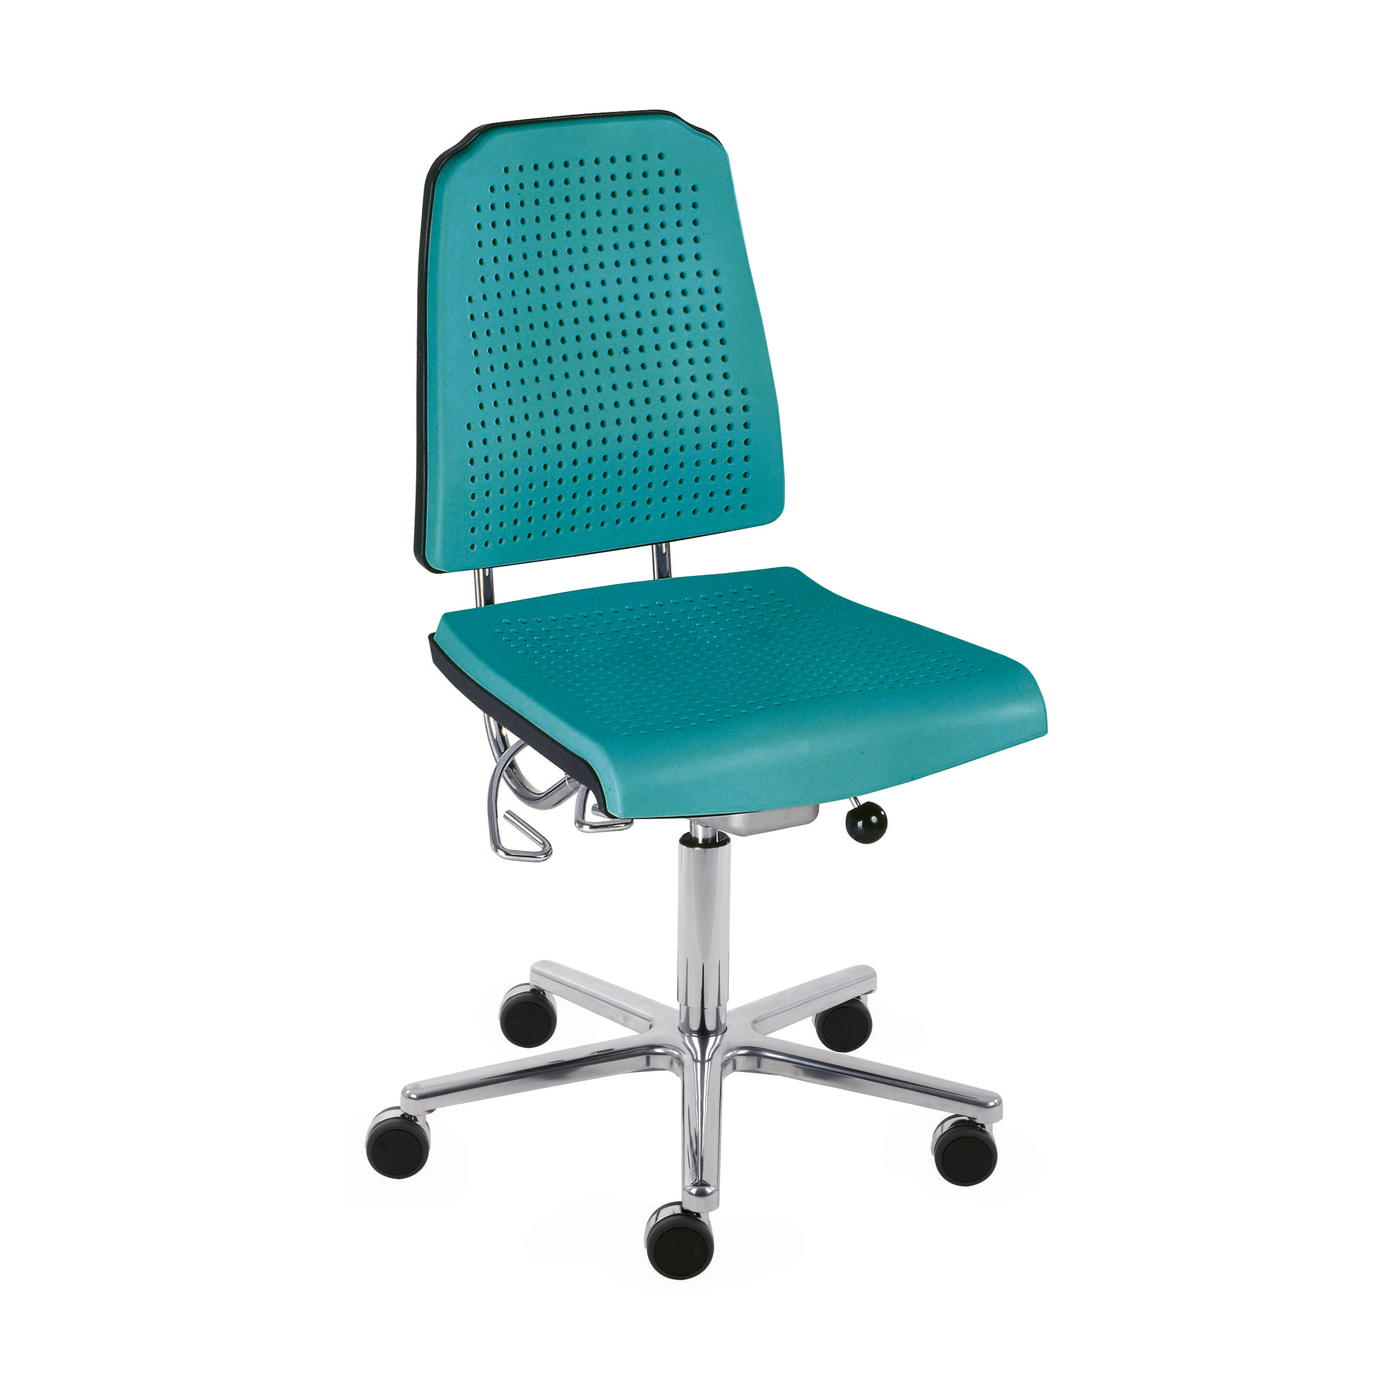 Klimastar Swivel Chair, Turquoise - 1 piece